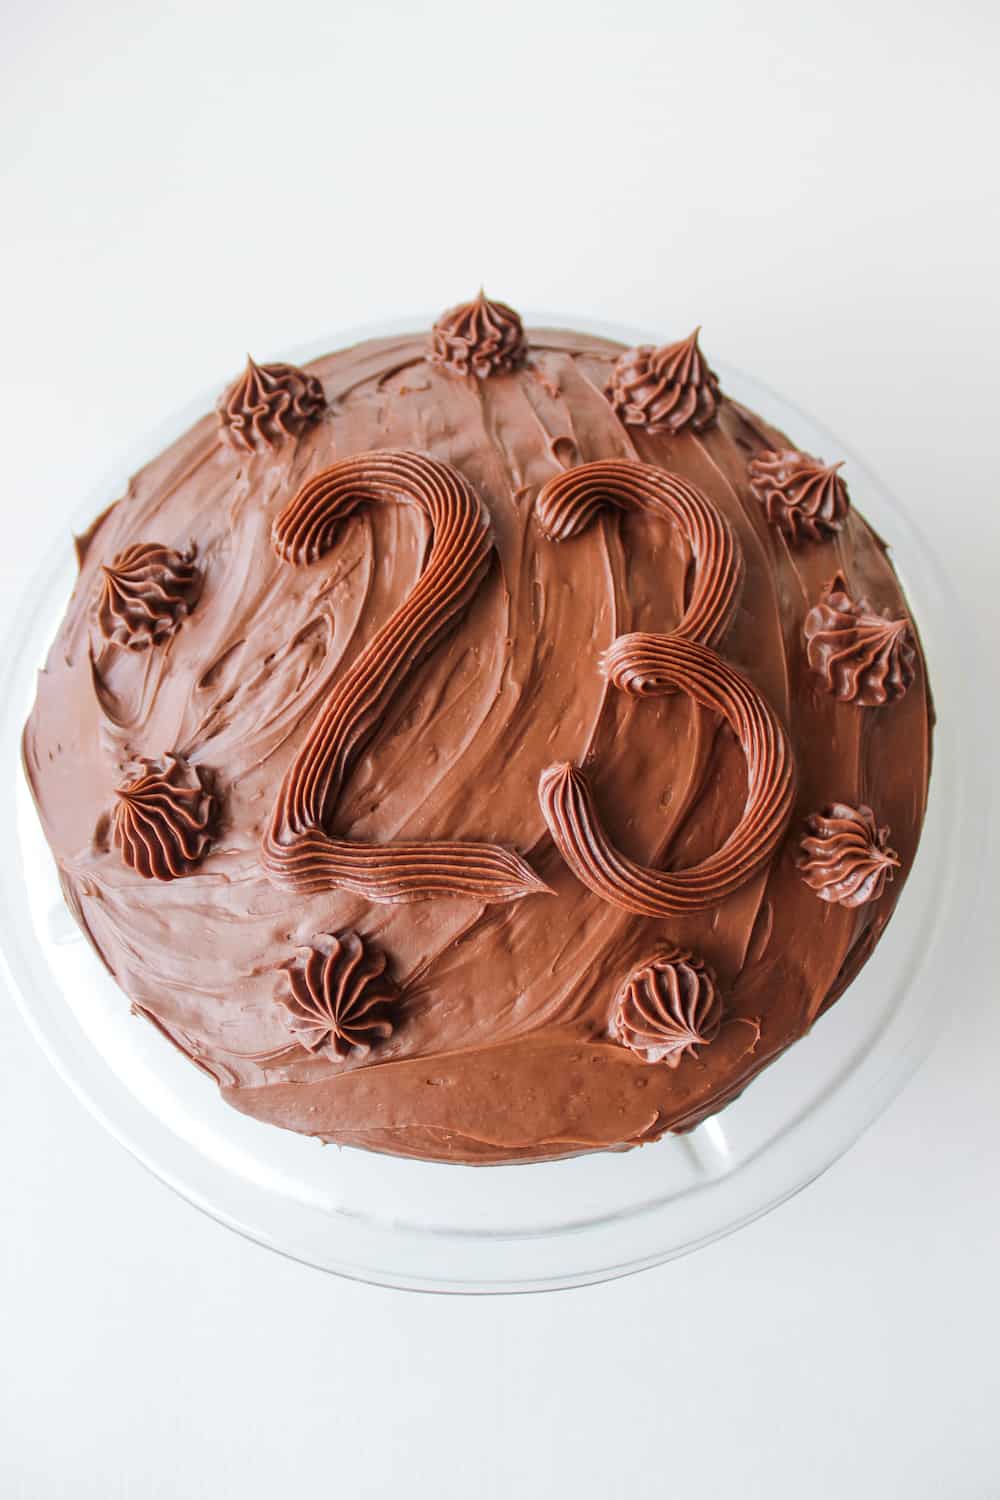 Birthday cake design